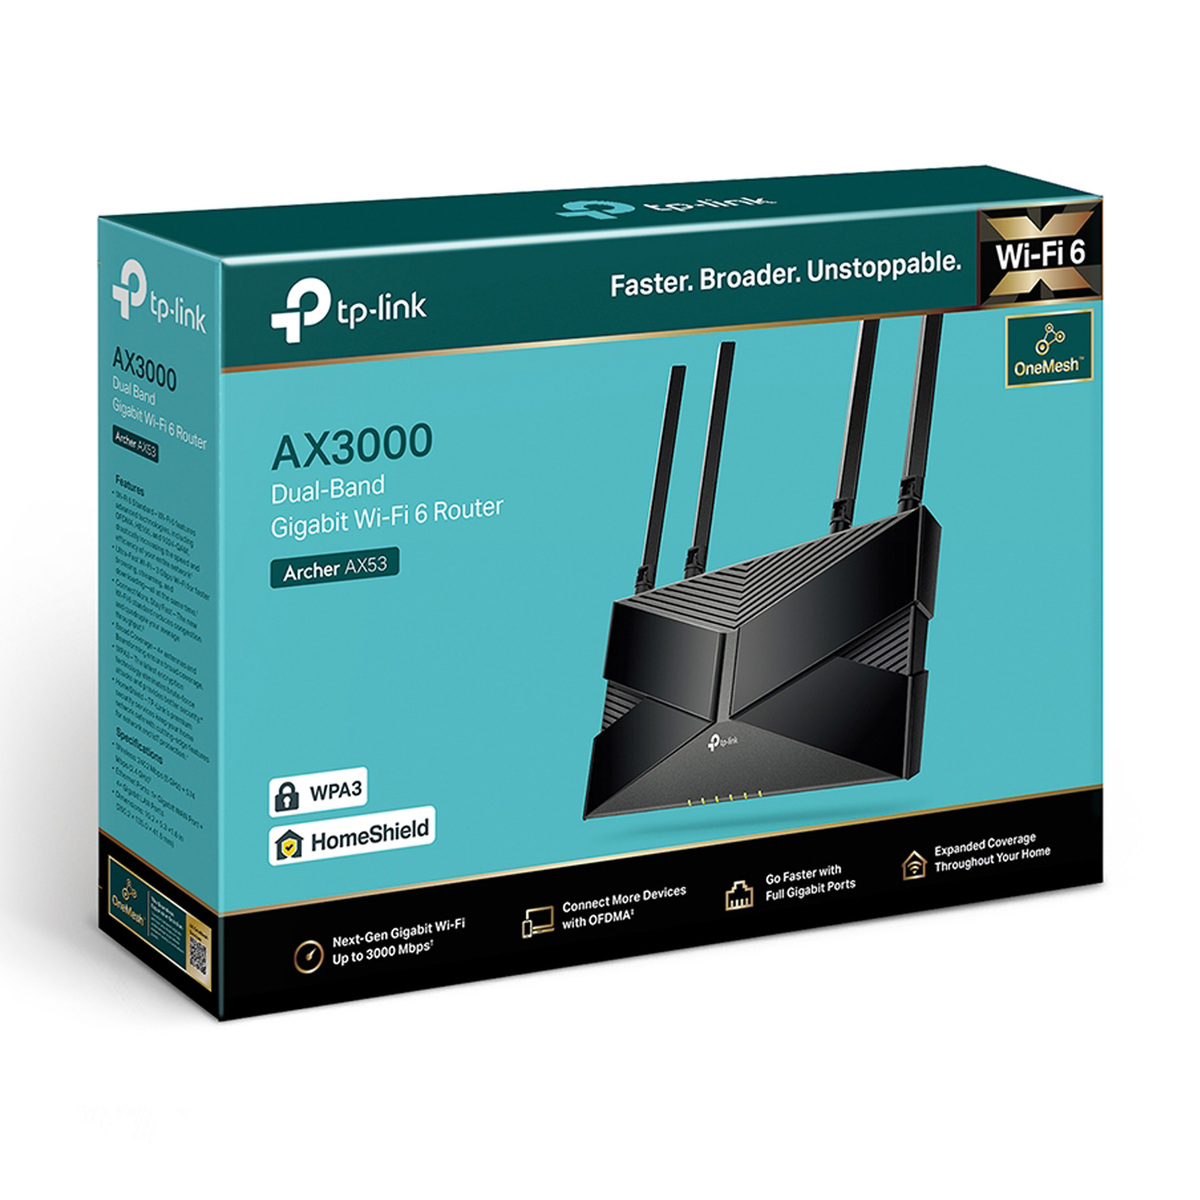 TP Link AX3000 Dual Band Gigabit Wi-Fi  Router Archer AX53